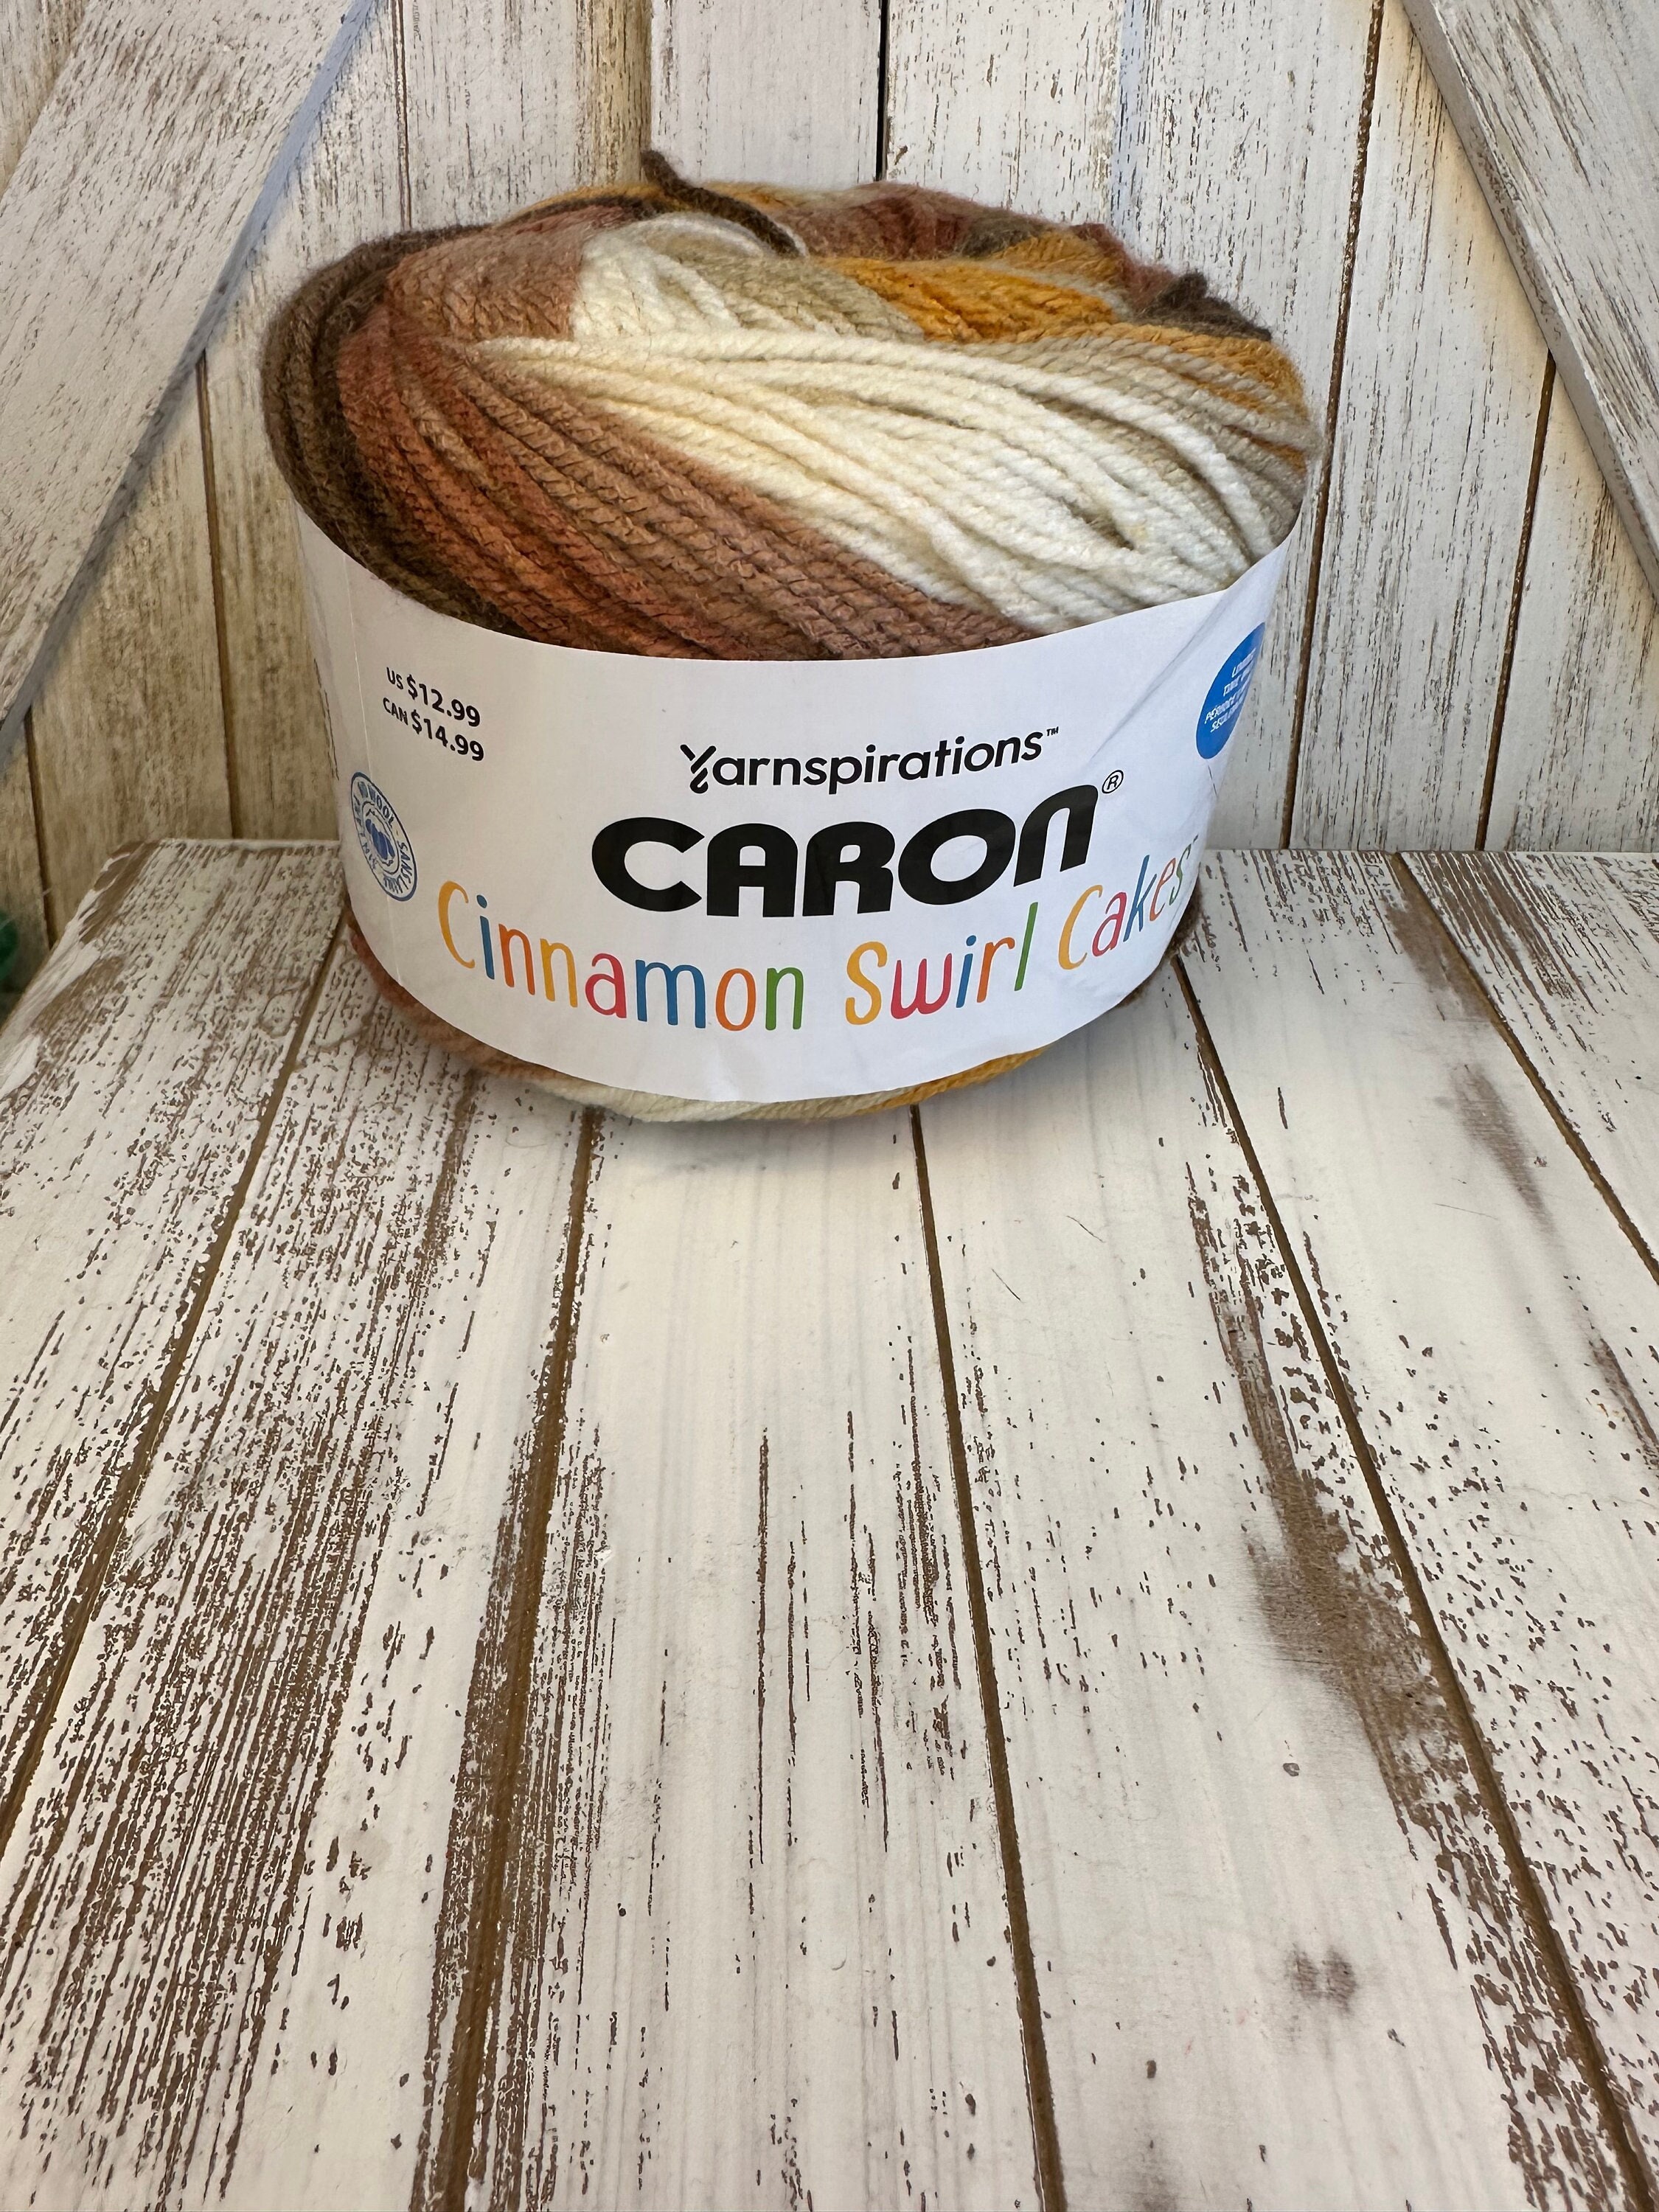 Caron Cinnamon Swirl Cakes tortoiseshell 